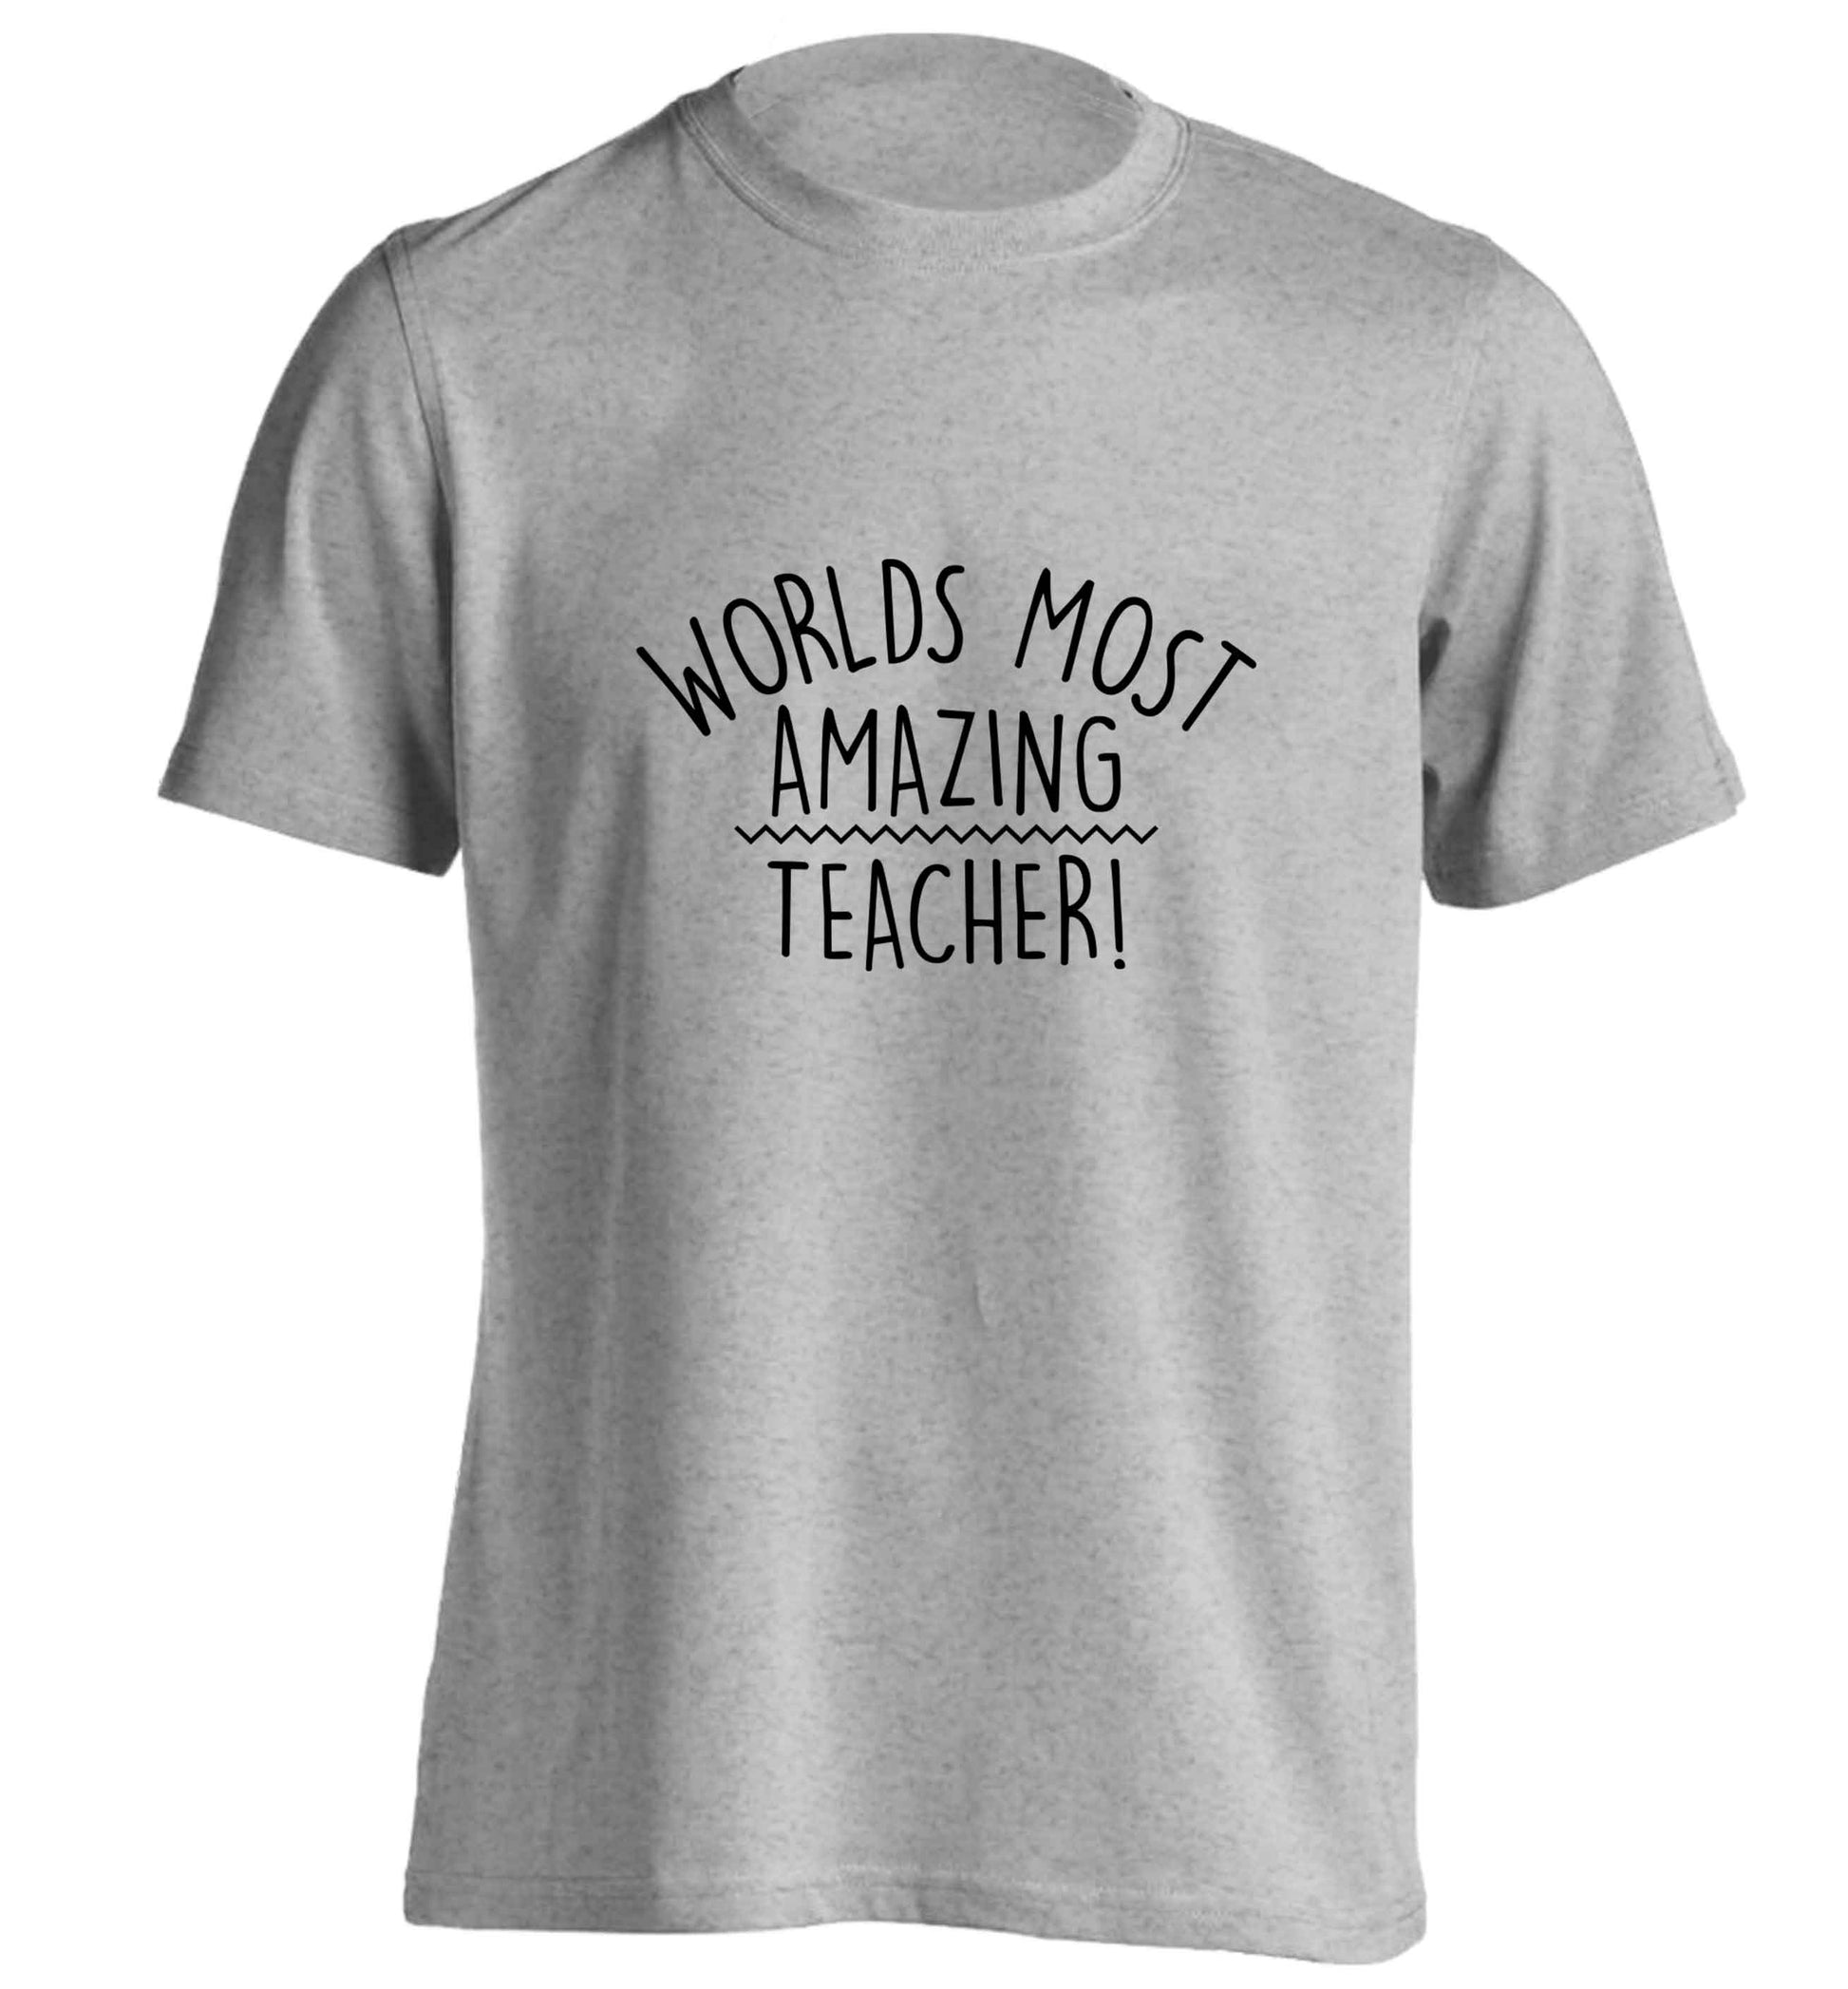 Worlds most amazing teacher adults unisex grey Tshirt 2XL